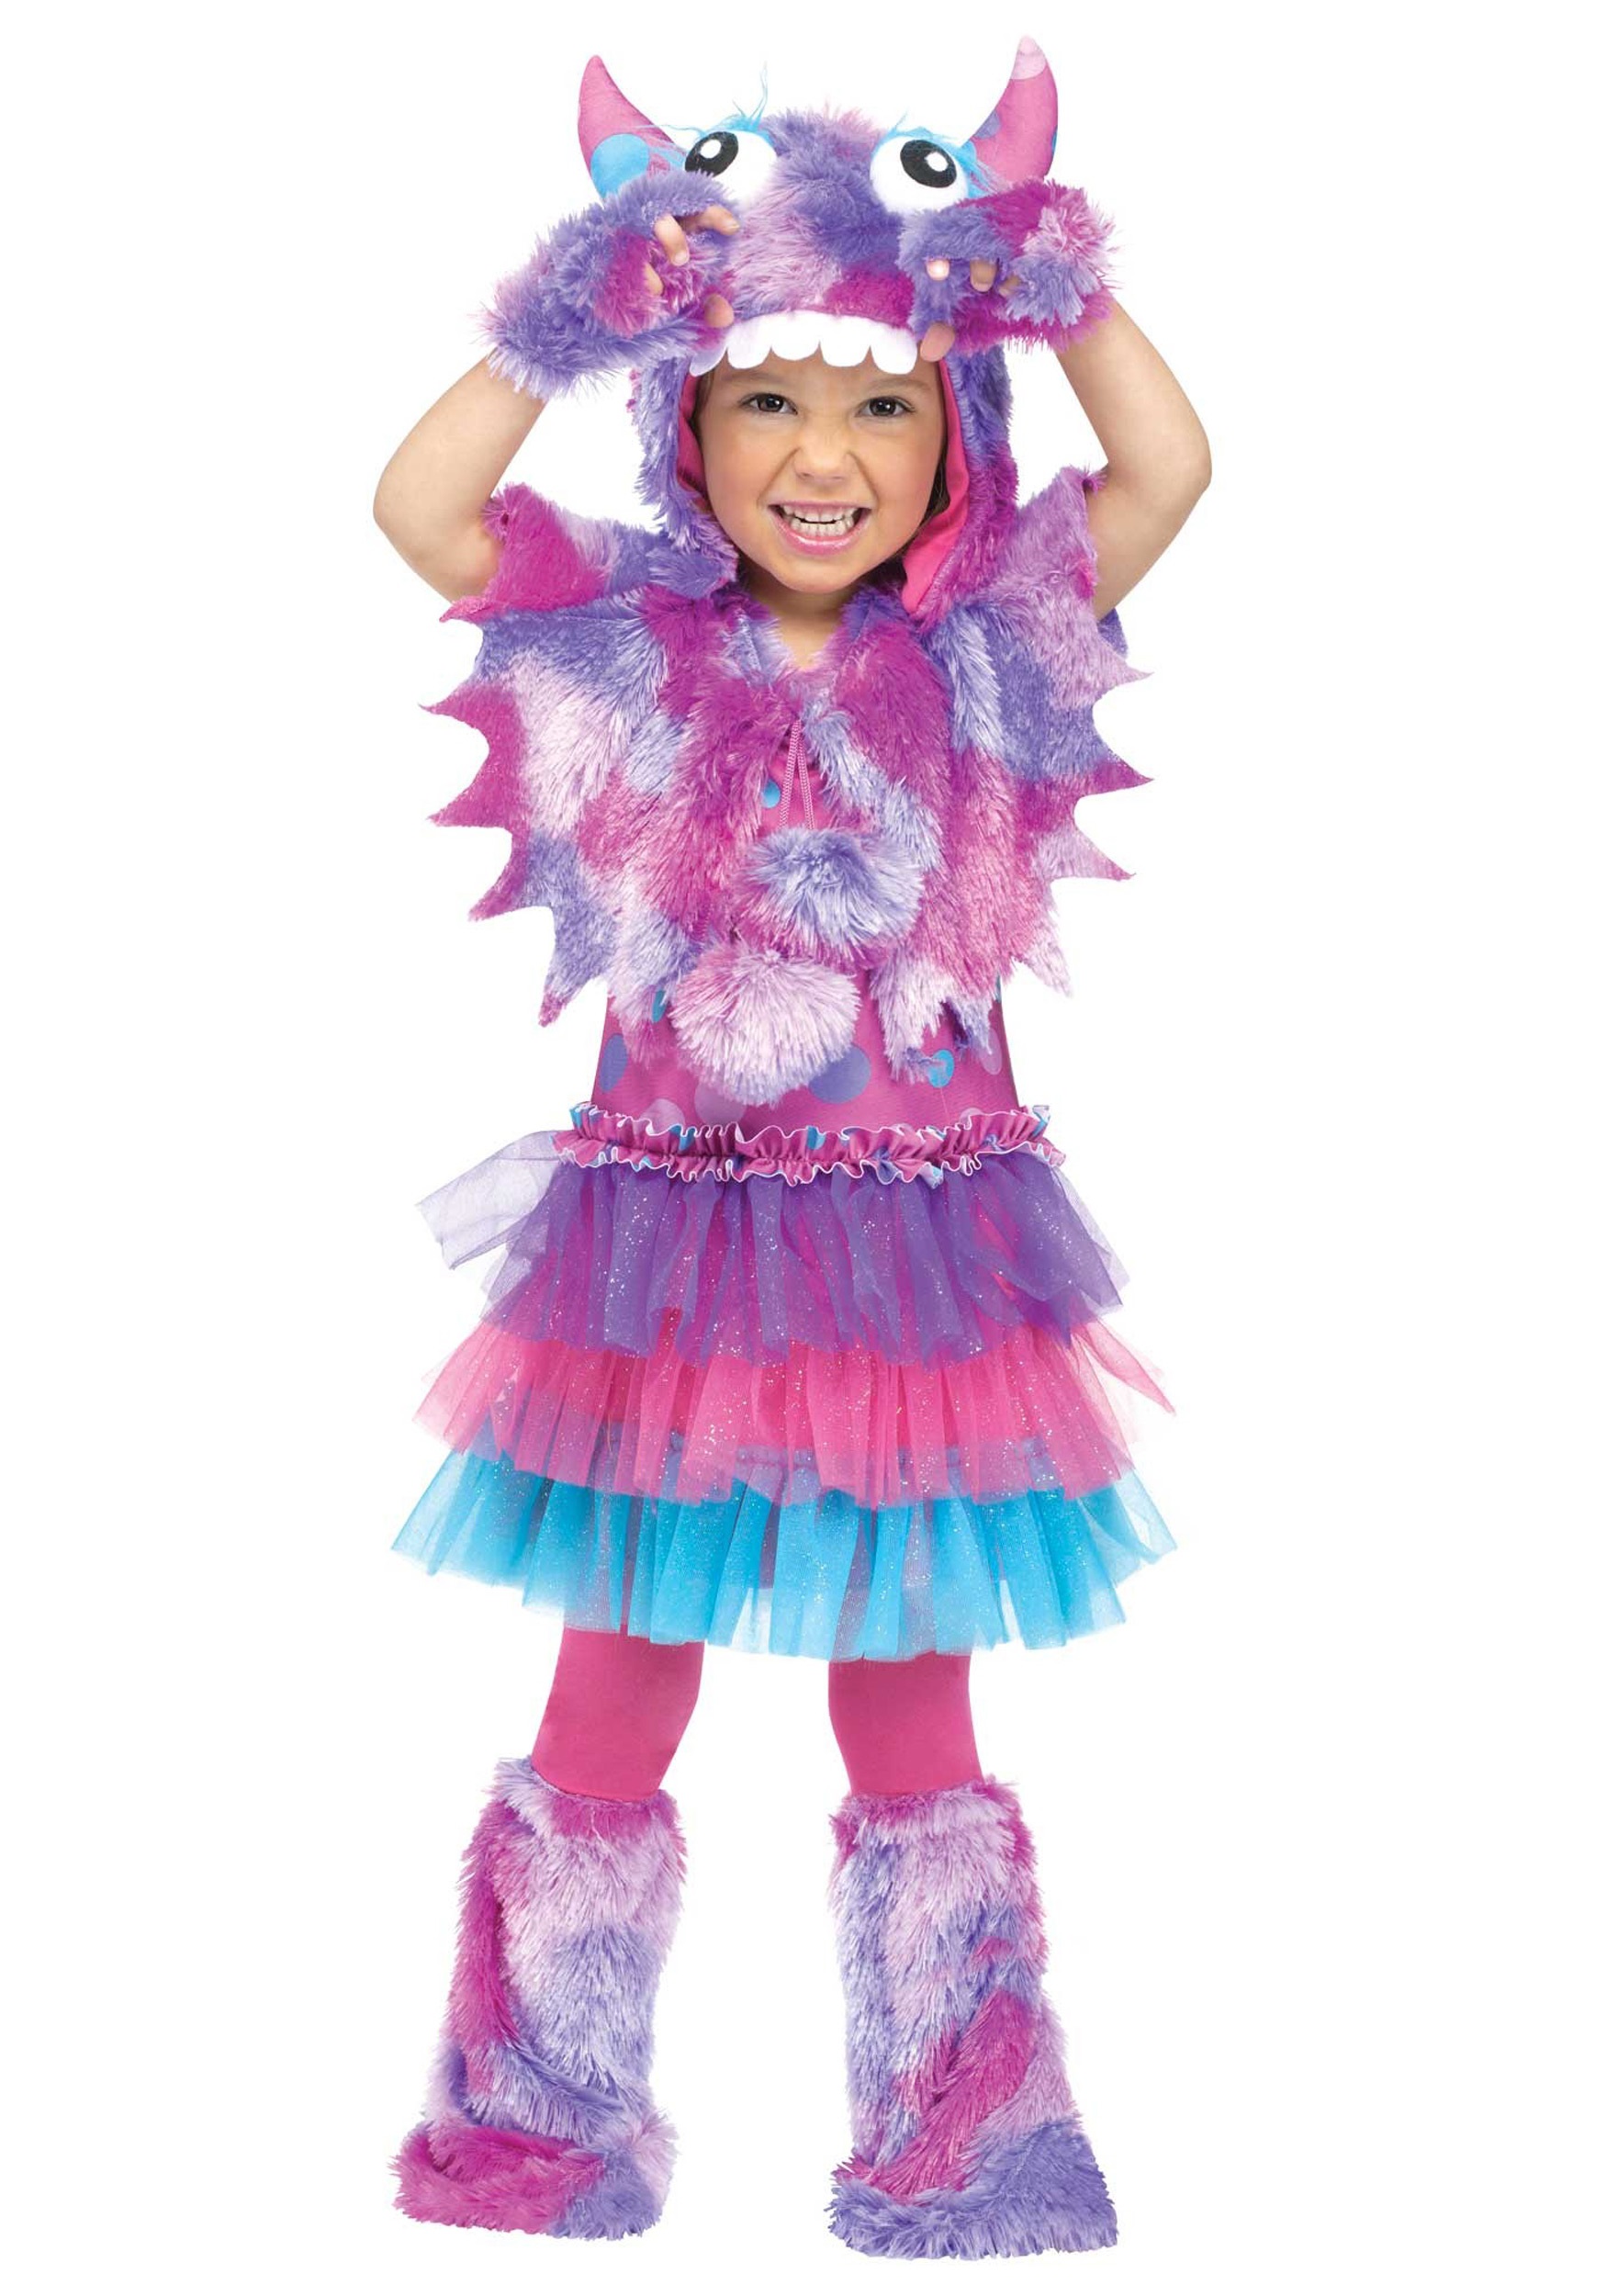 Photos - Fancy Dress Toddler Fun World Toddlers Polka Dot Monster Costume Blue/Pink/Purple FU12 